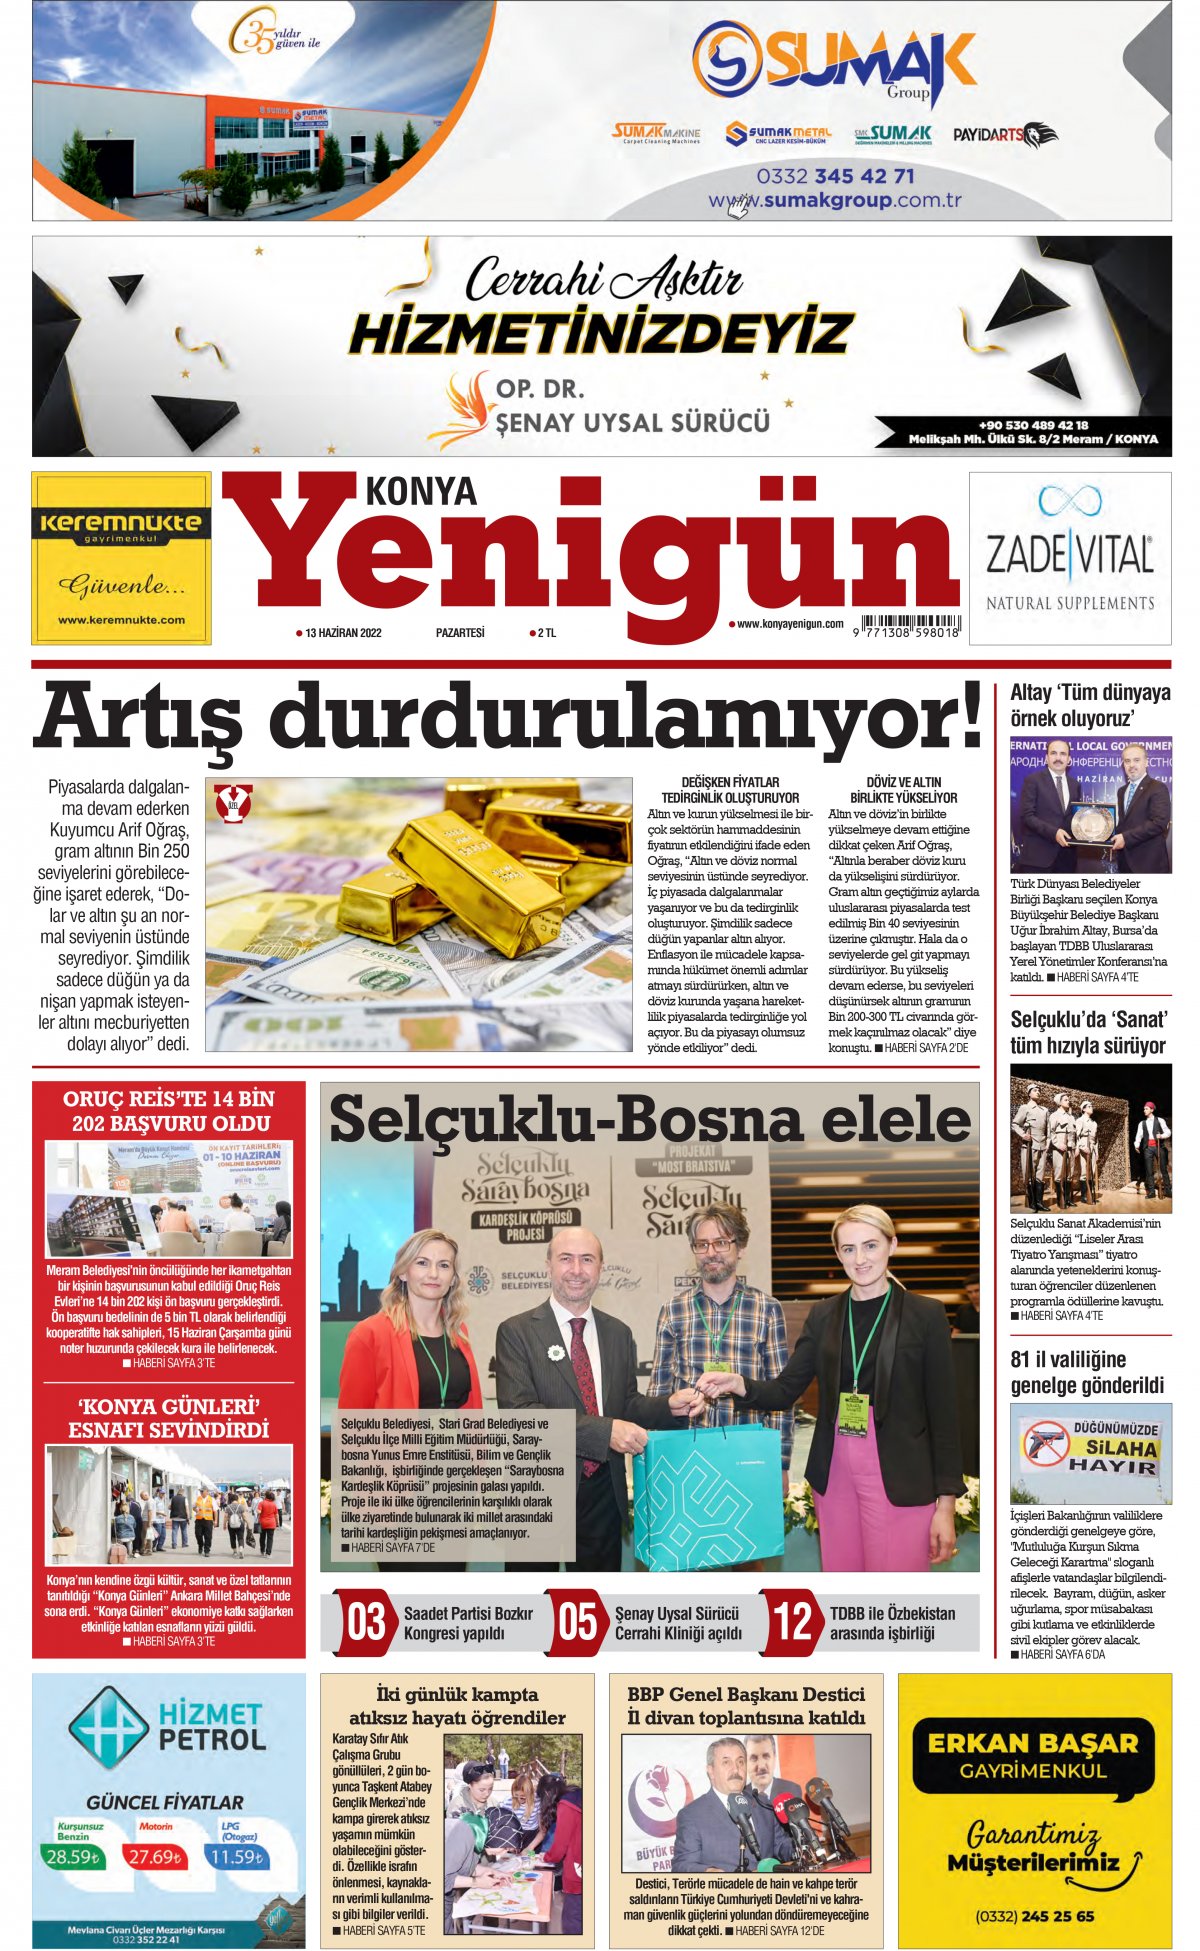 Konya Yenigün Gazetesi - 13.06.2022 Manşeti